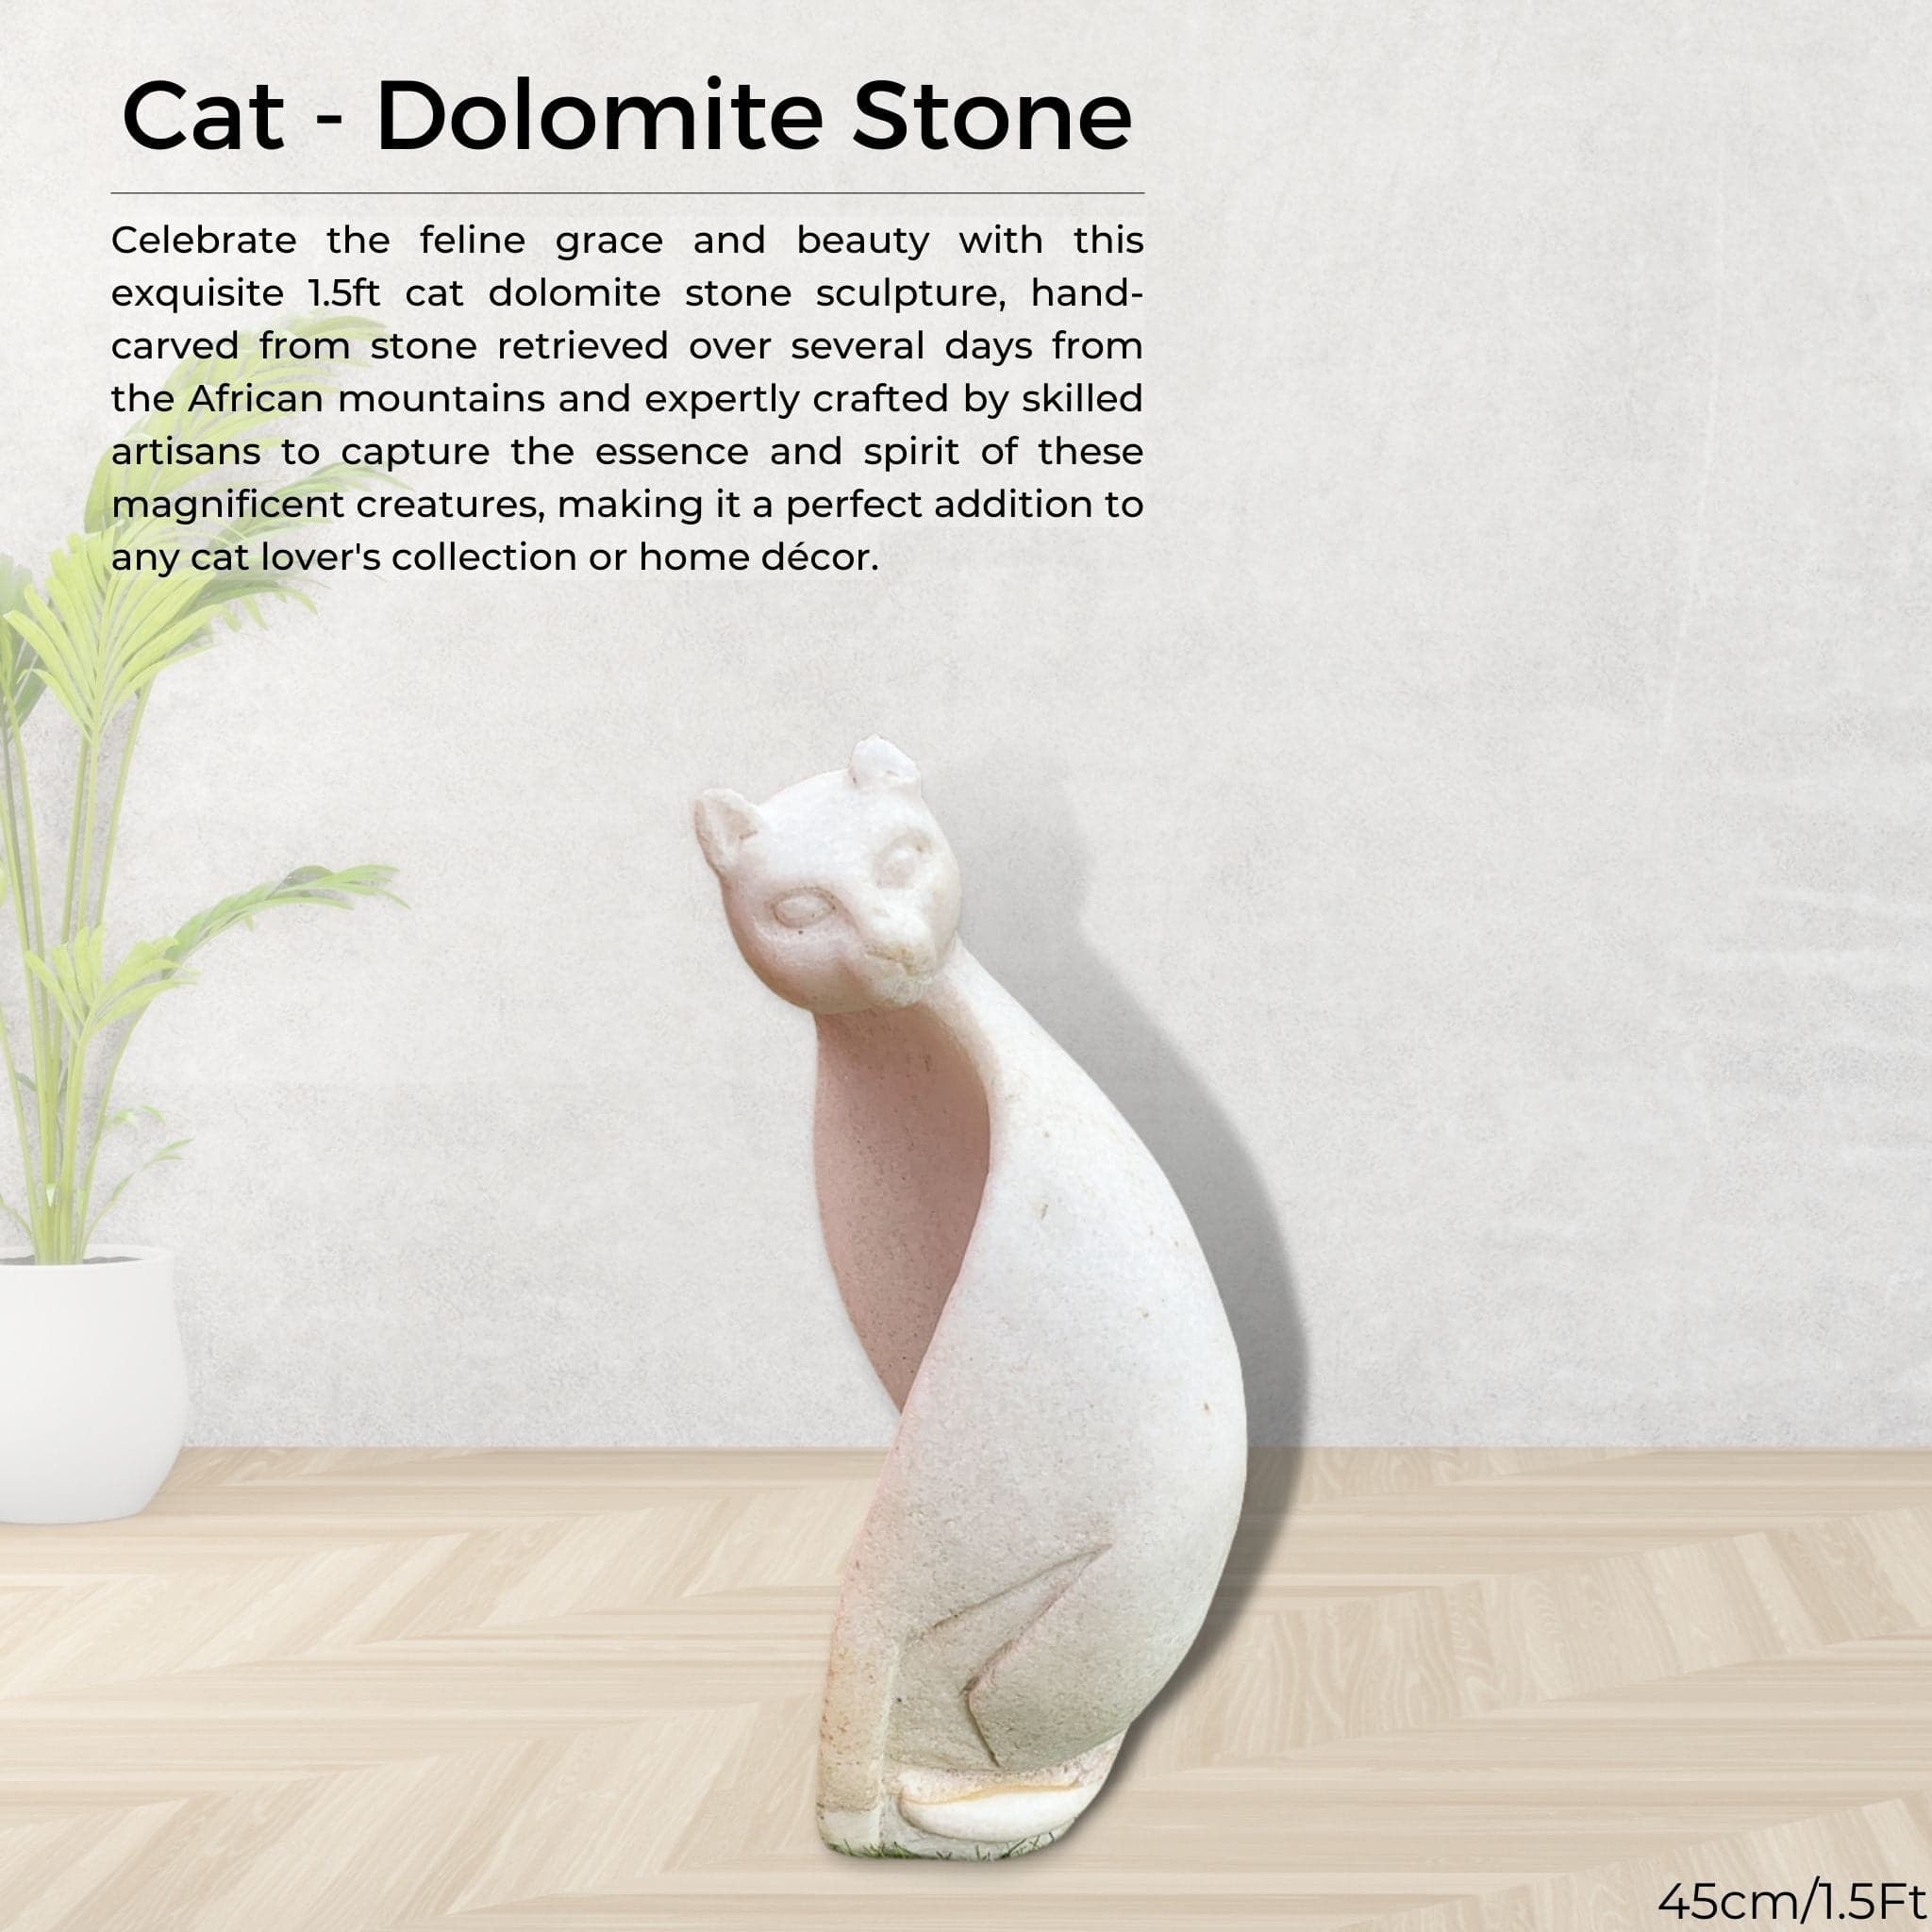 Cat - Dolomite Stone - Pangea Sculptures